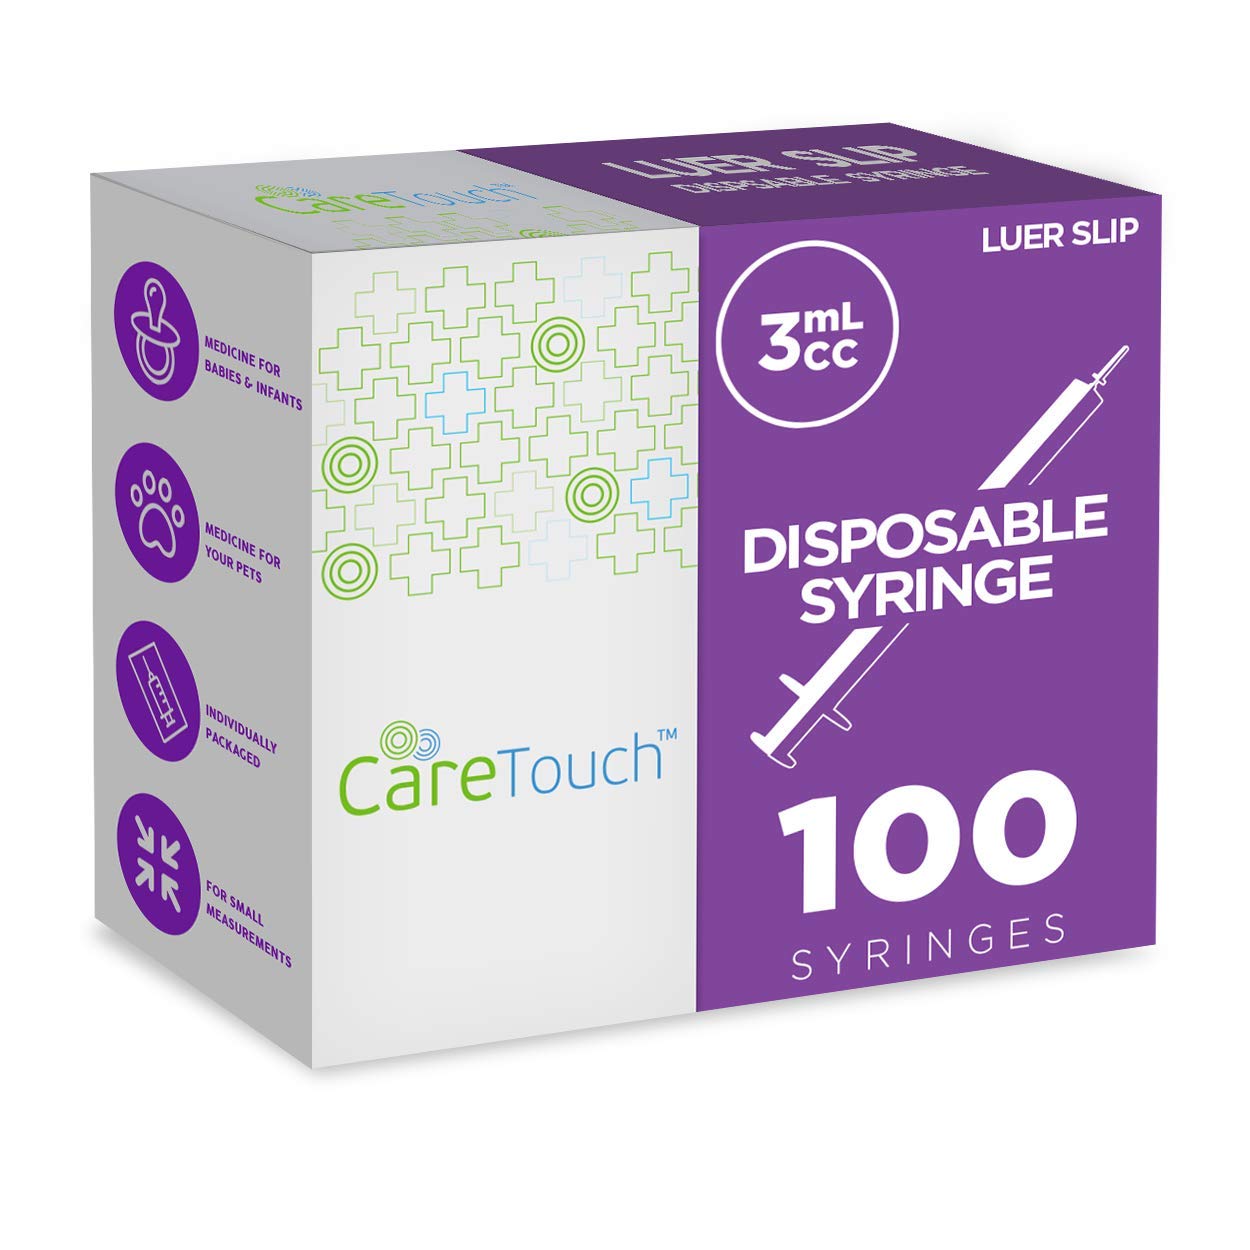 Care Touch Syringe with Luer Slip Tip - 3ml 100 Sterile Syringes (No n